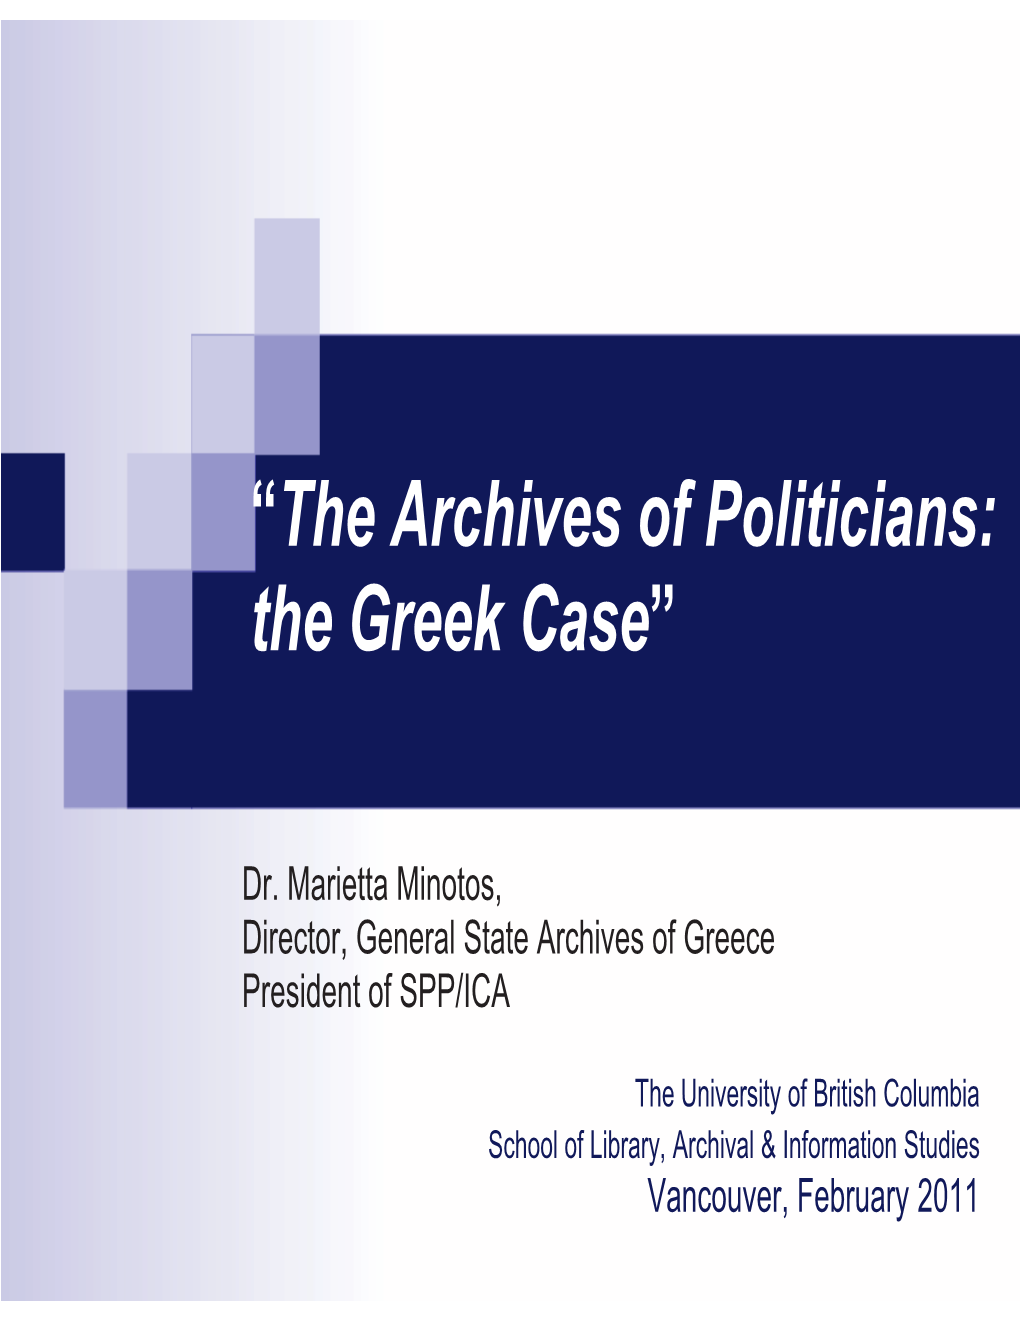 The Greek Case”